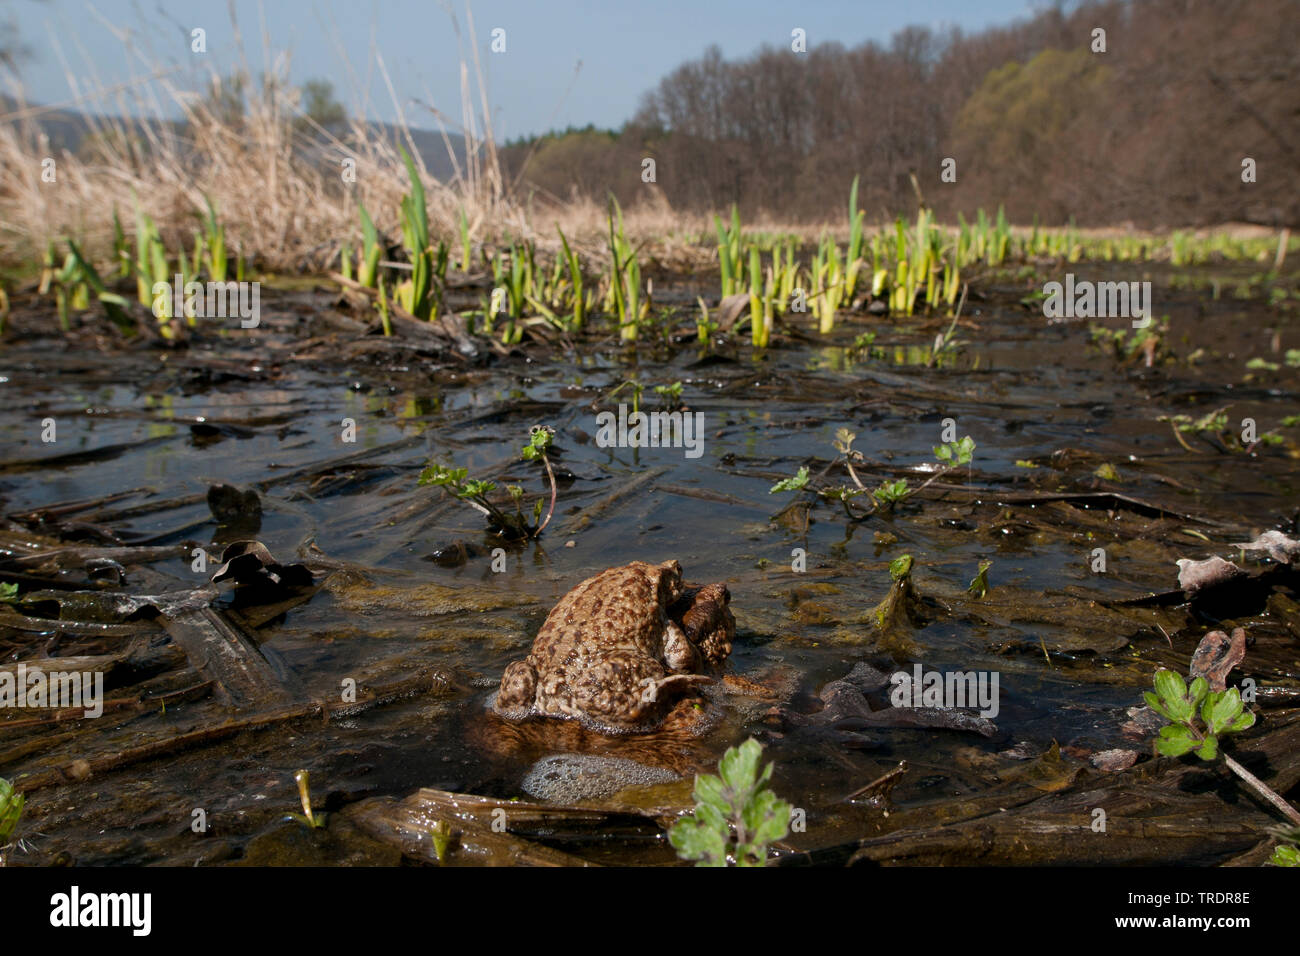 European common toad (Bufo bufo), Amplexus axillaris in shallow water, rear view, Hungary Stock Photo